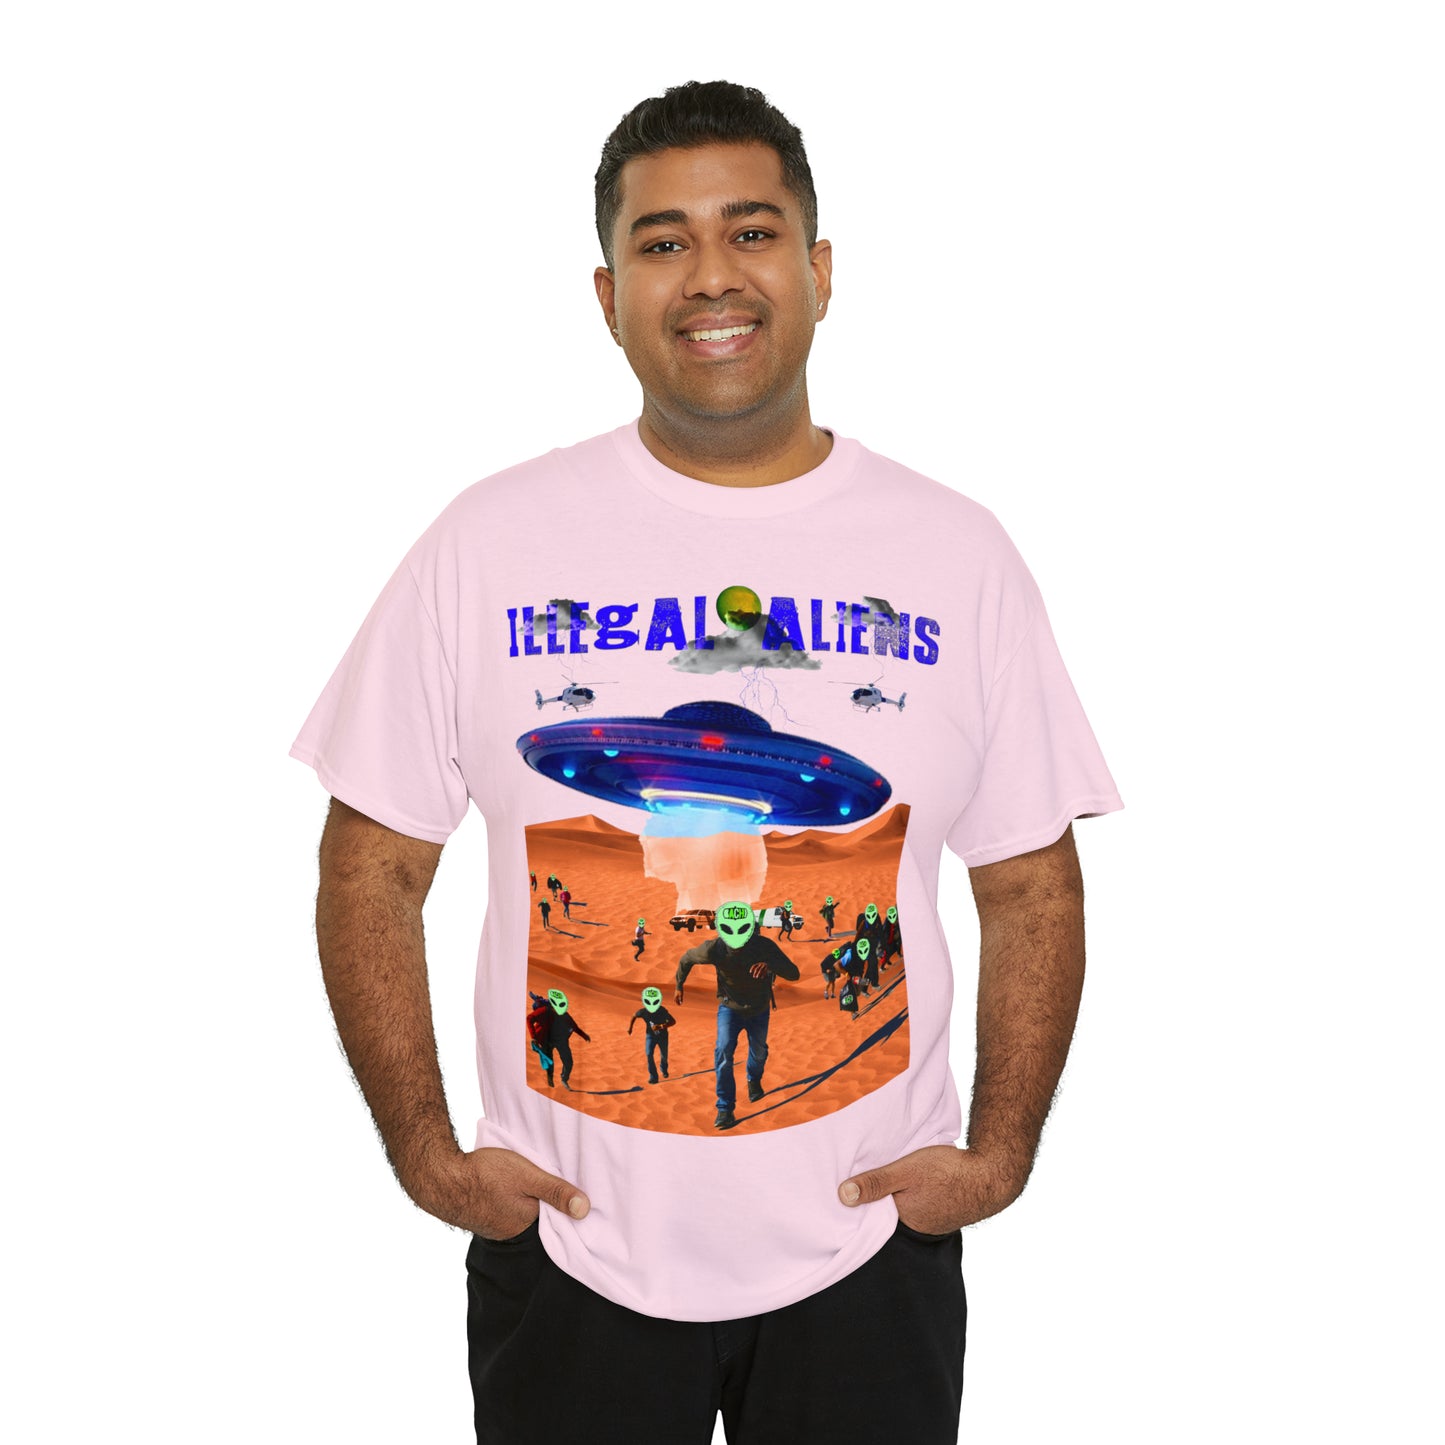 Unisex T-Shirt Illegal Aliens Alien Invasion